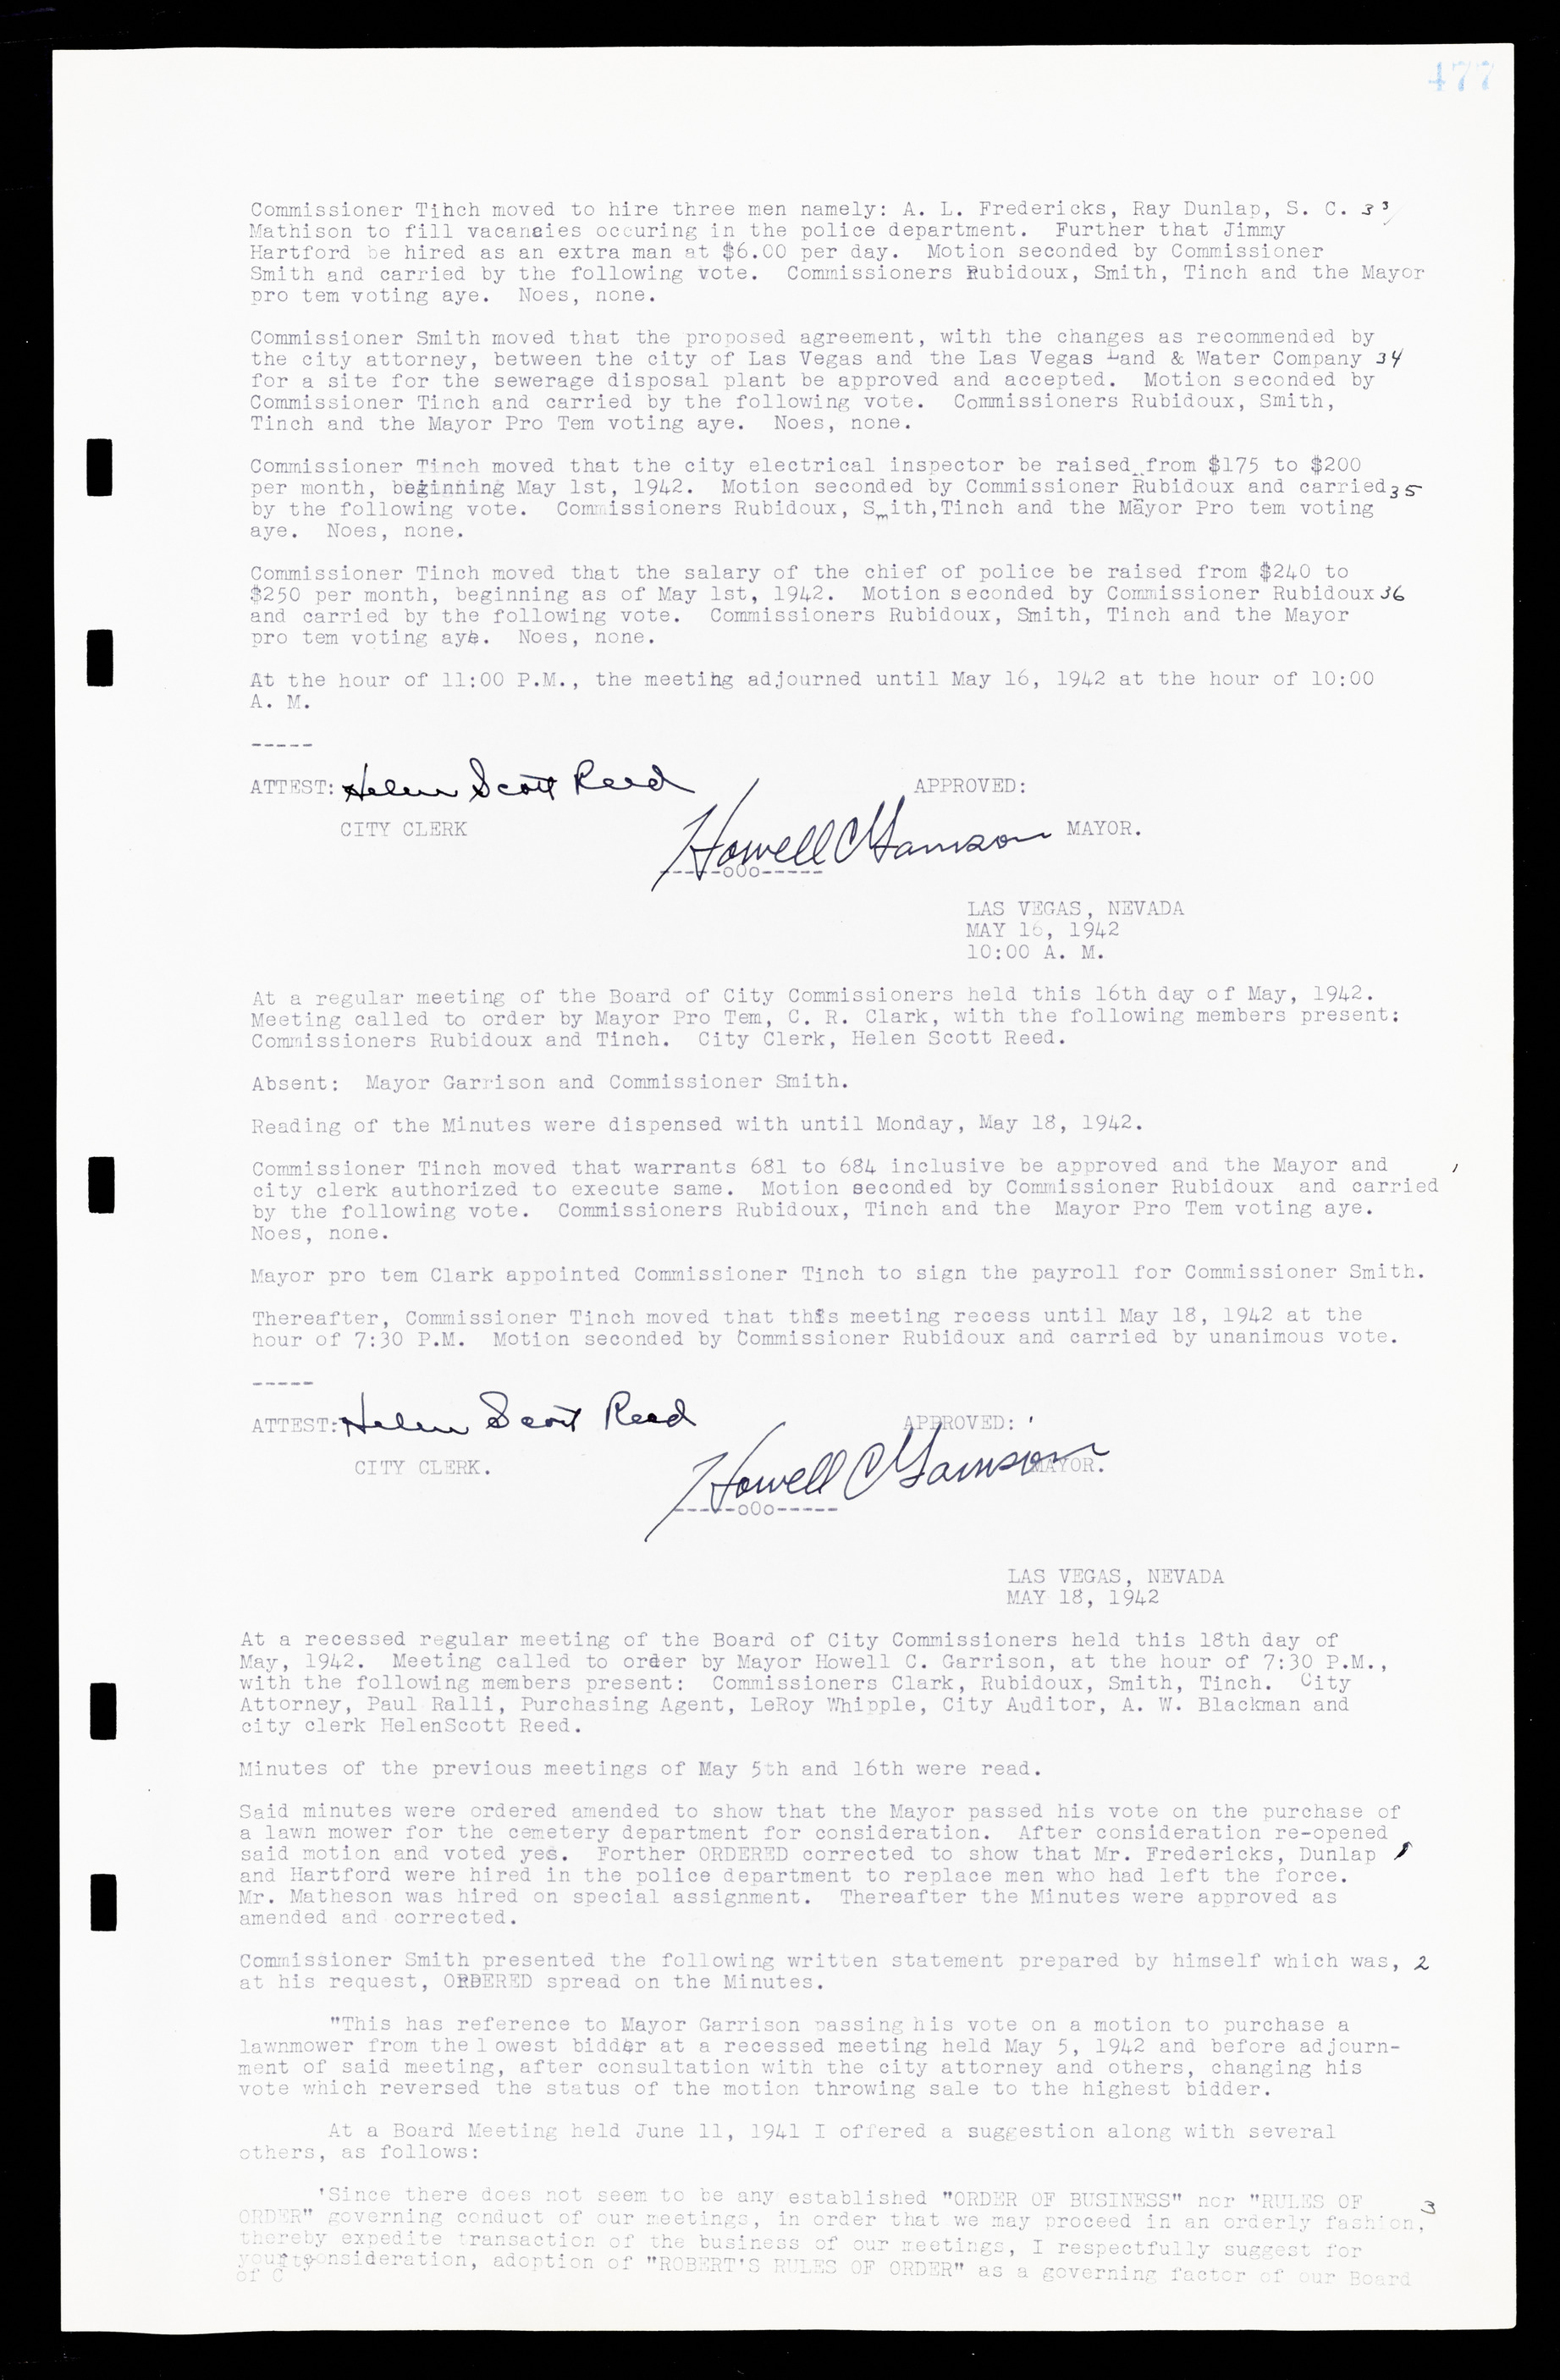 Las Vegas City Commission Minutes, February 17, 1937 to August 4, 1942, lvc000004-505